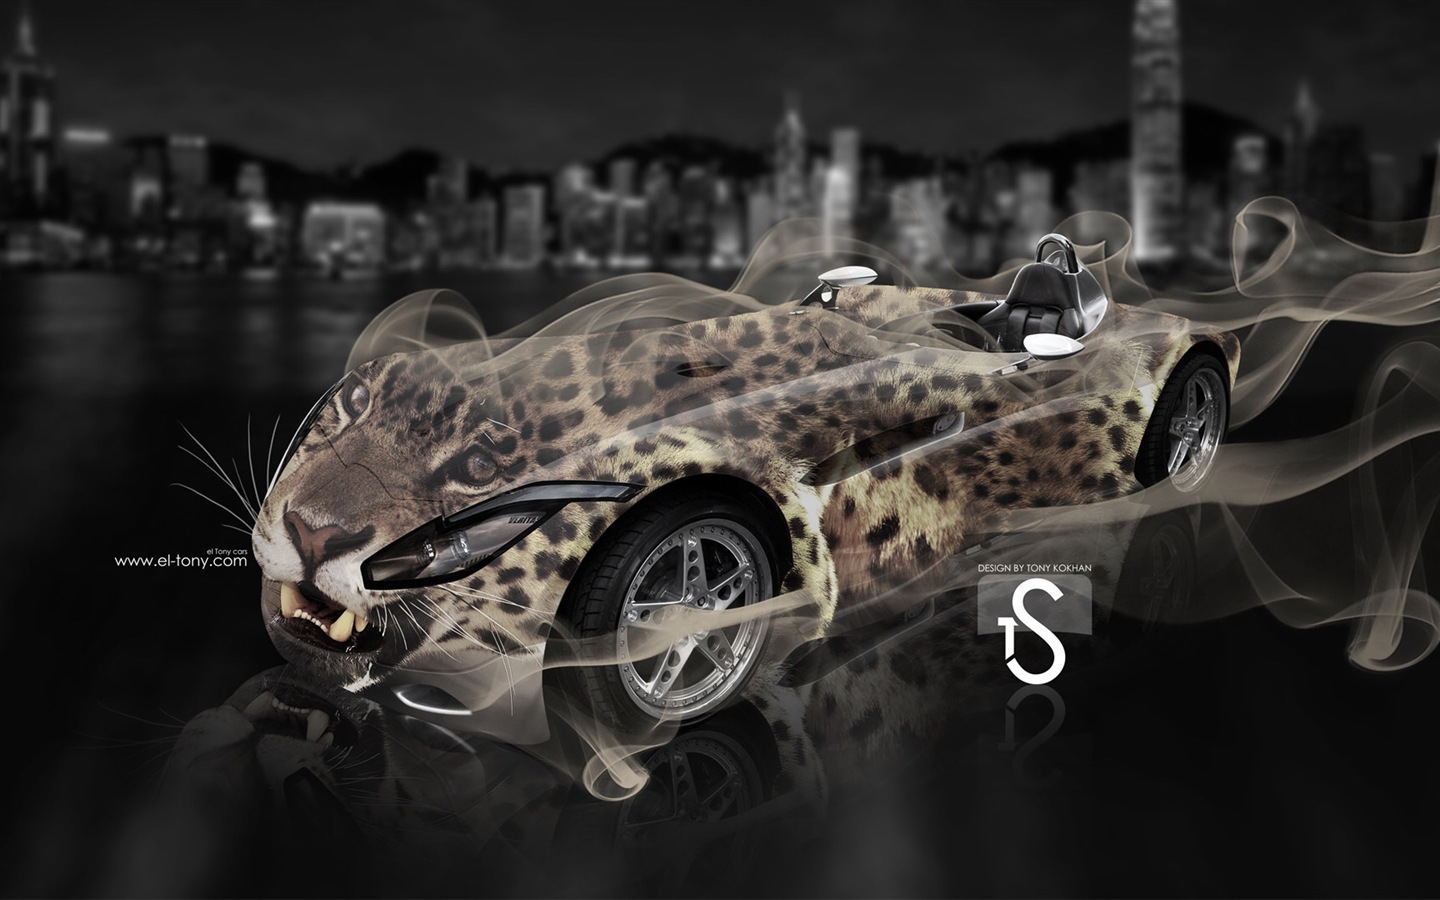 Creative dream car design wallpaper, Animal automotive #2 - 1440x900